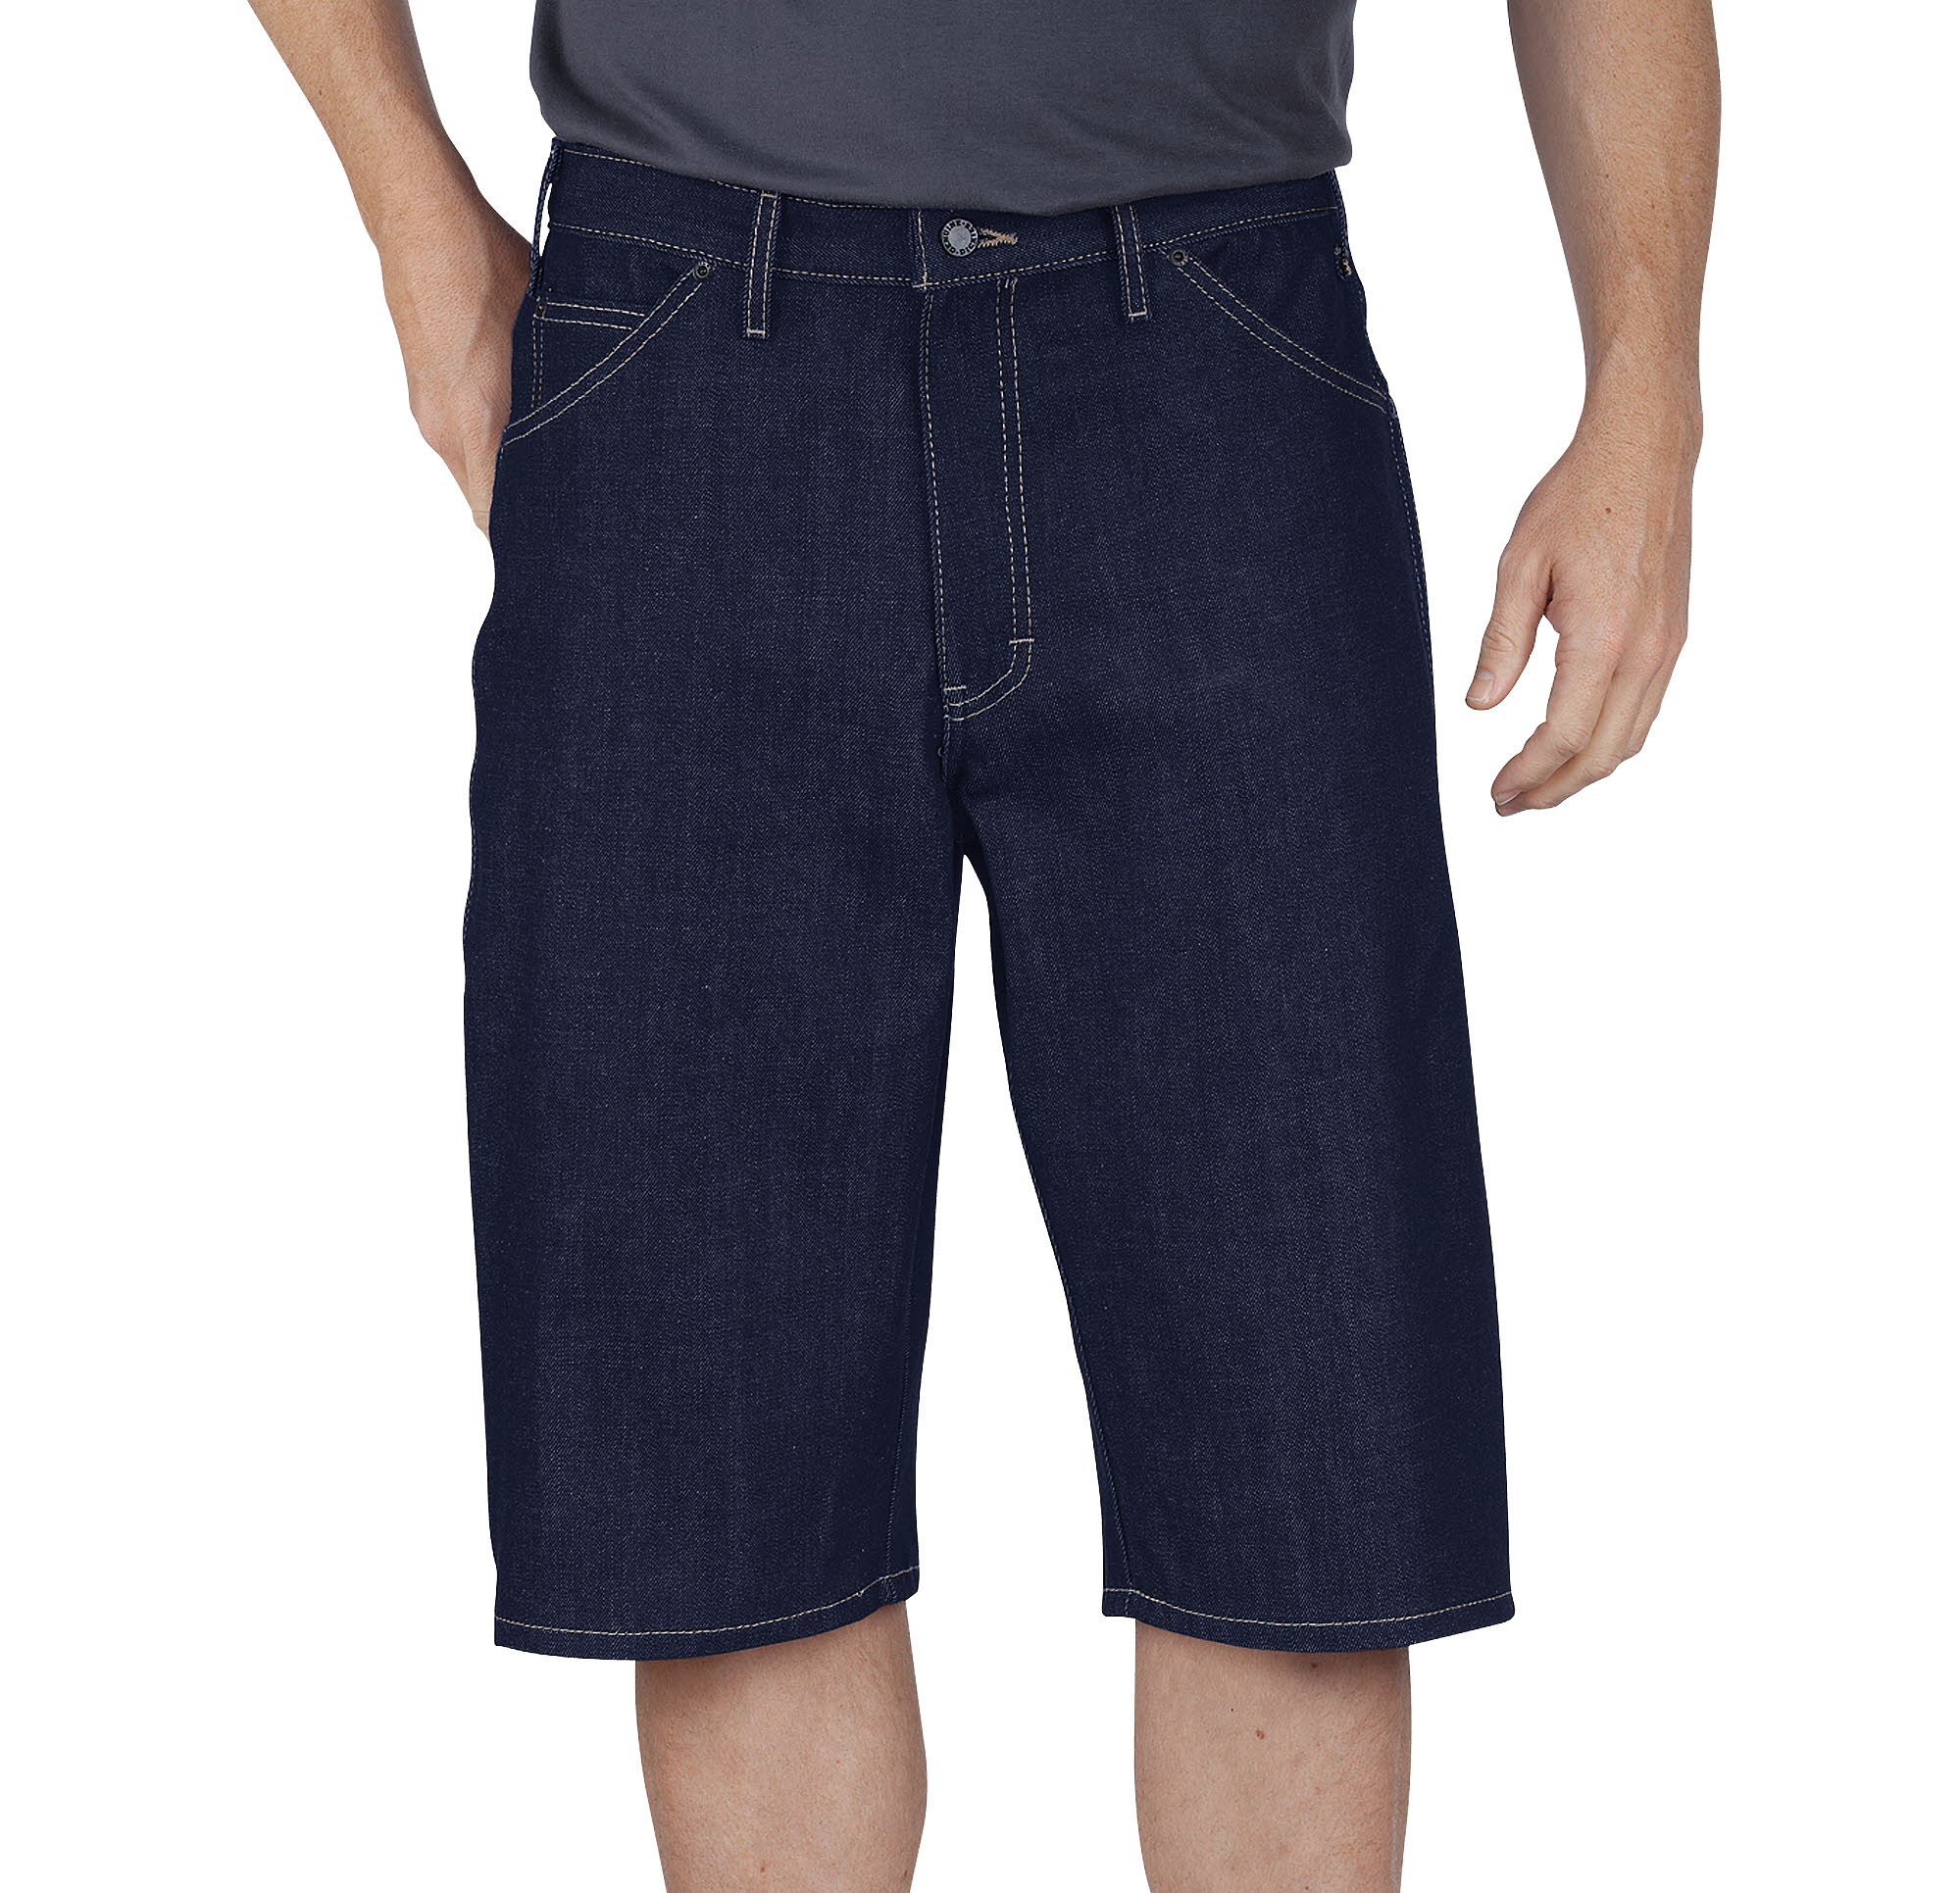 dickie jean shorts